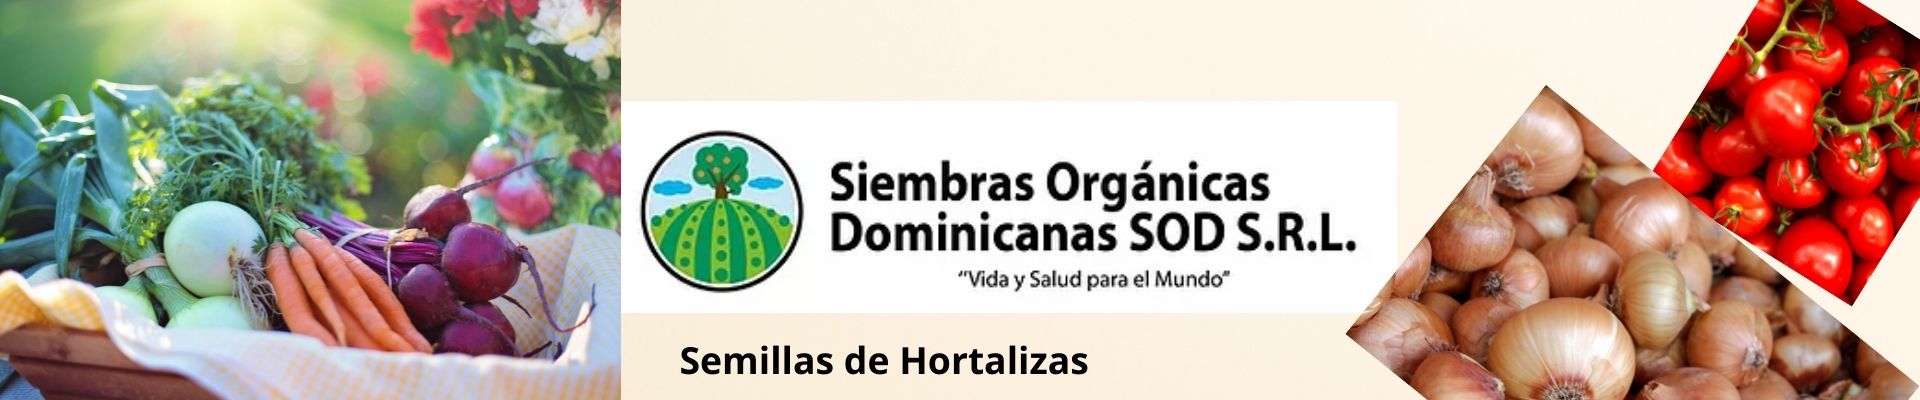 banner siembras organicas dominicana